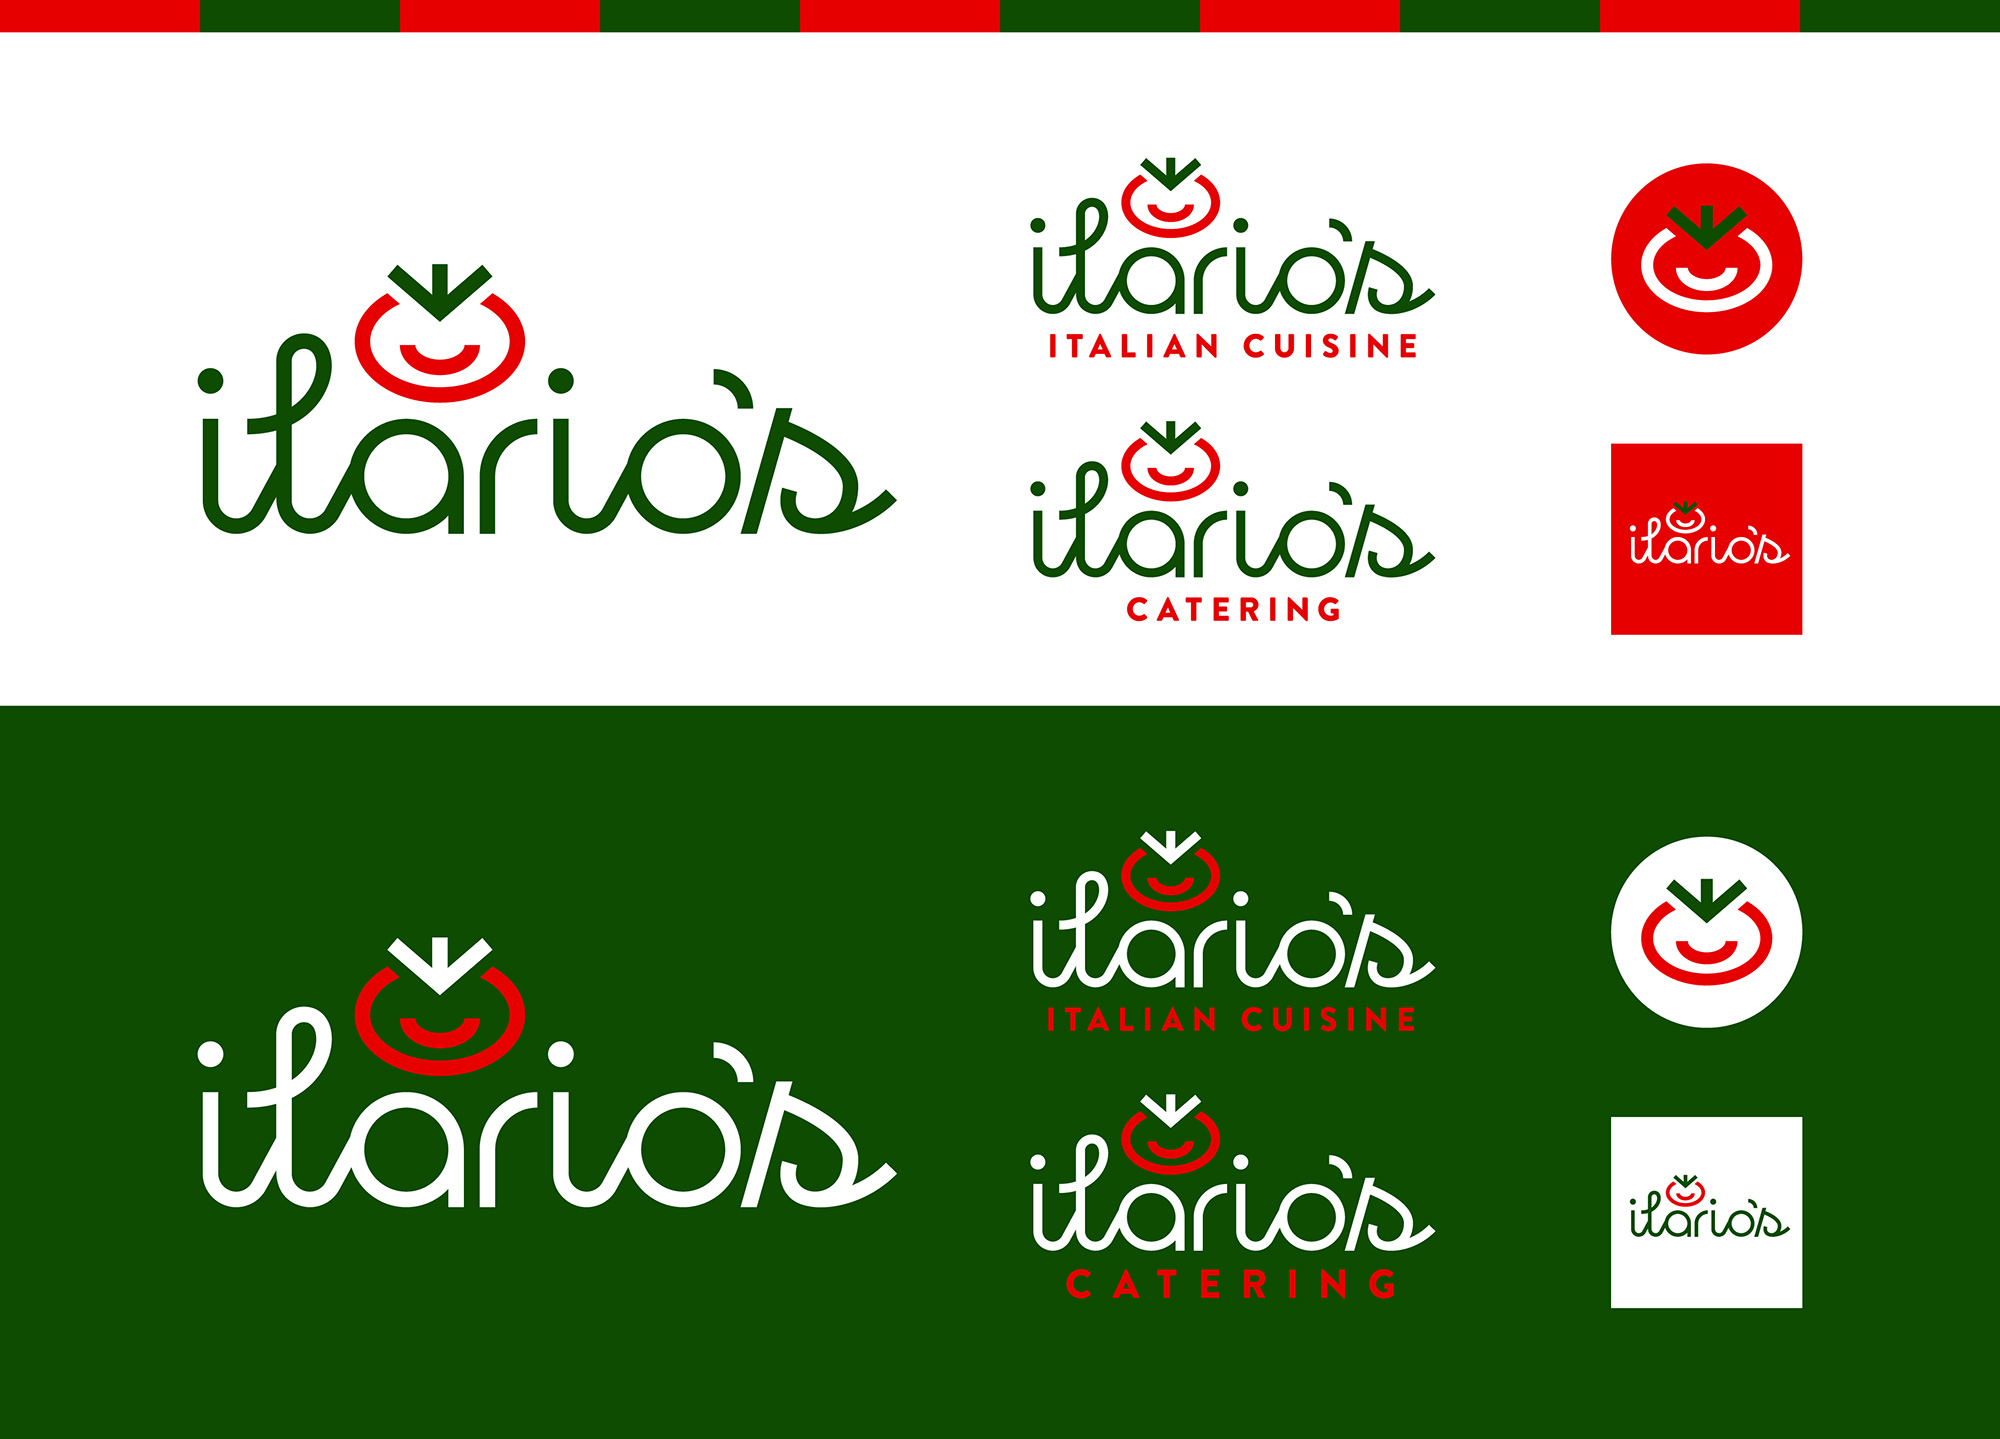 Ilario's Italian restaurant logo design by beau morrow for left hand design in austin texas